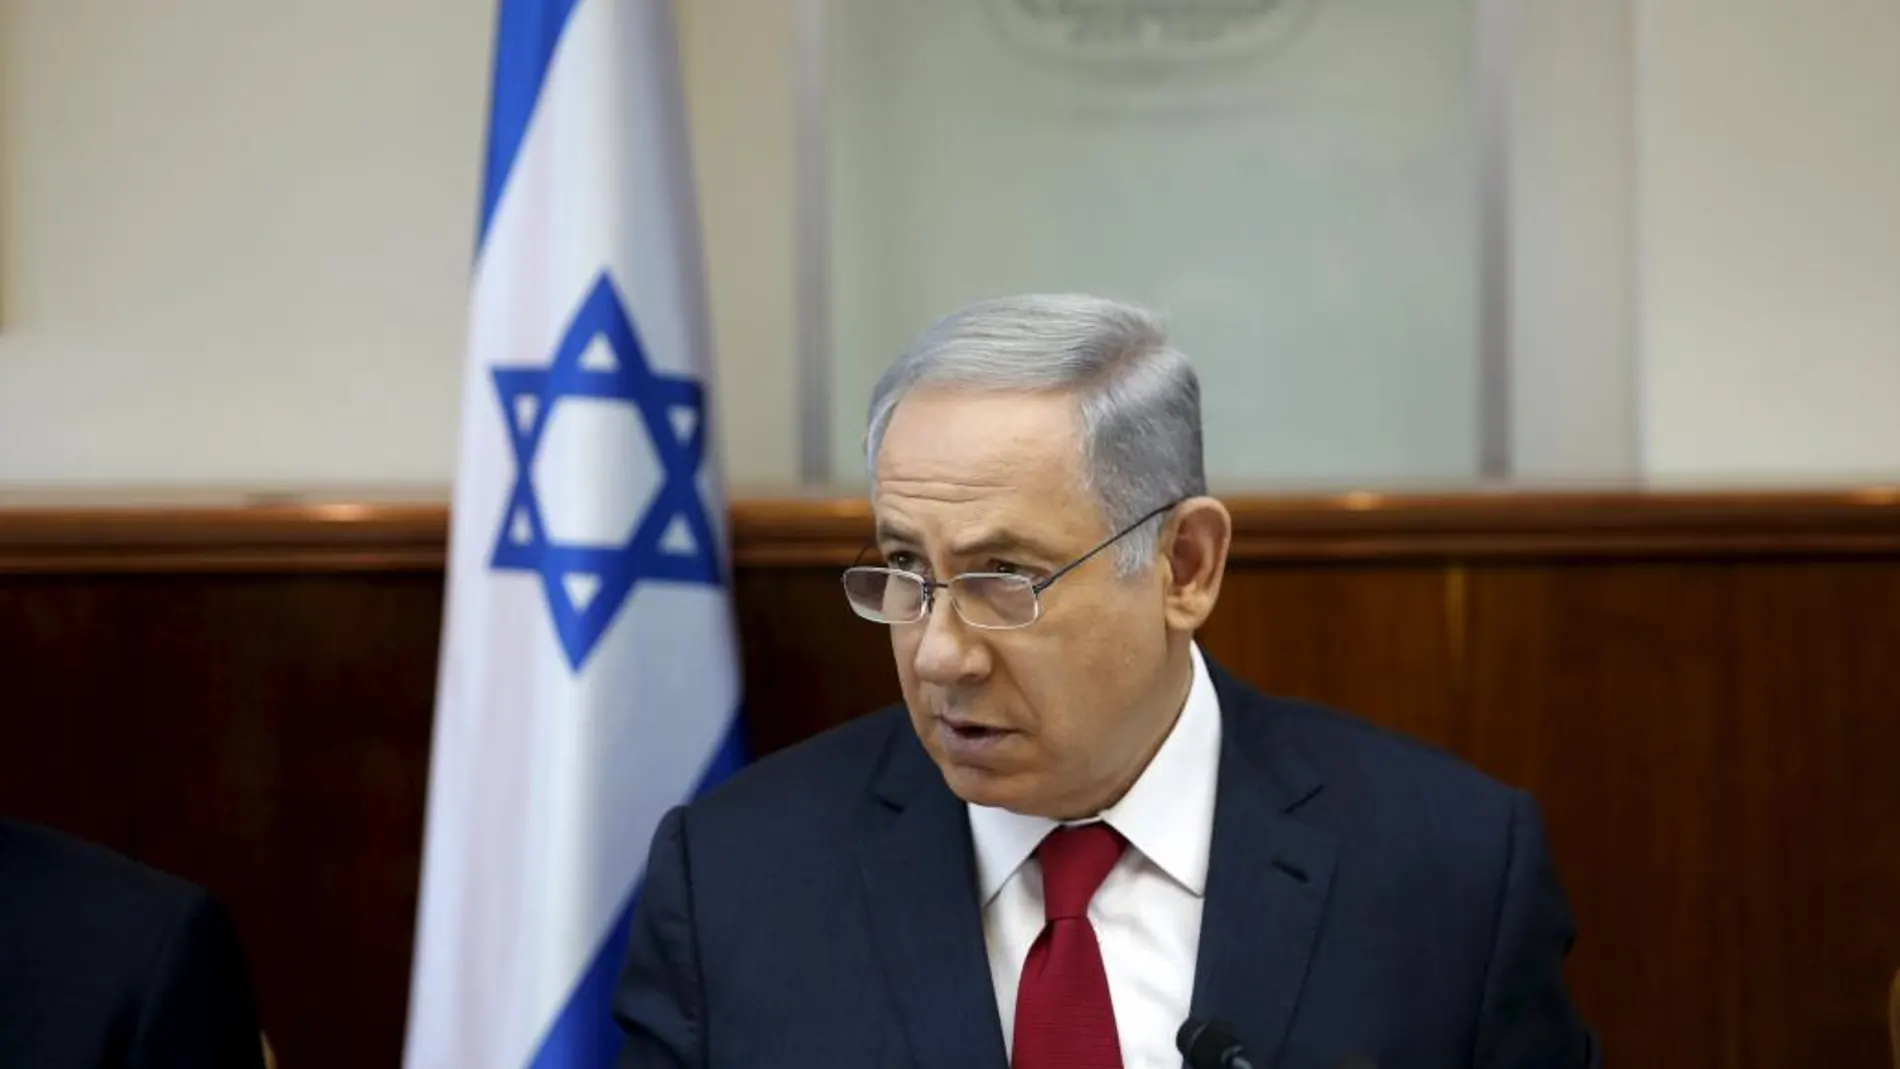 El primer ministro israelí, Benjamin Netanyahu, la semana pasada